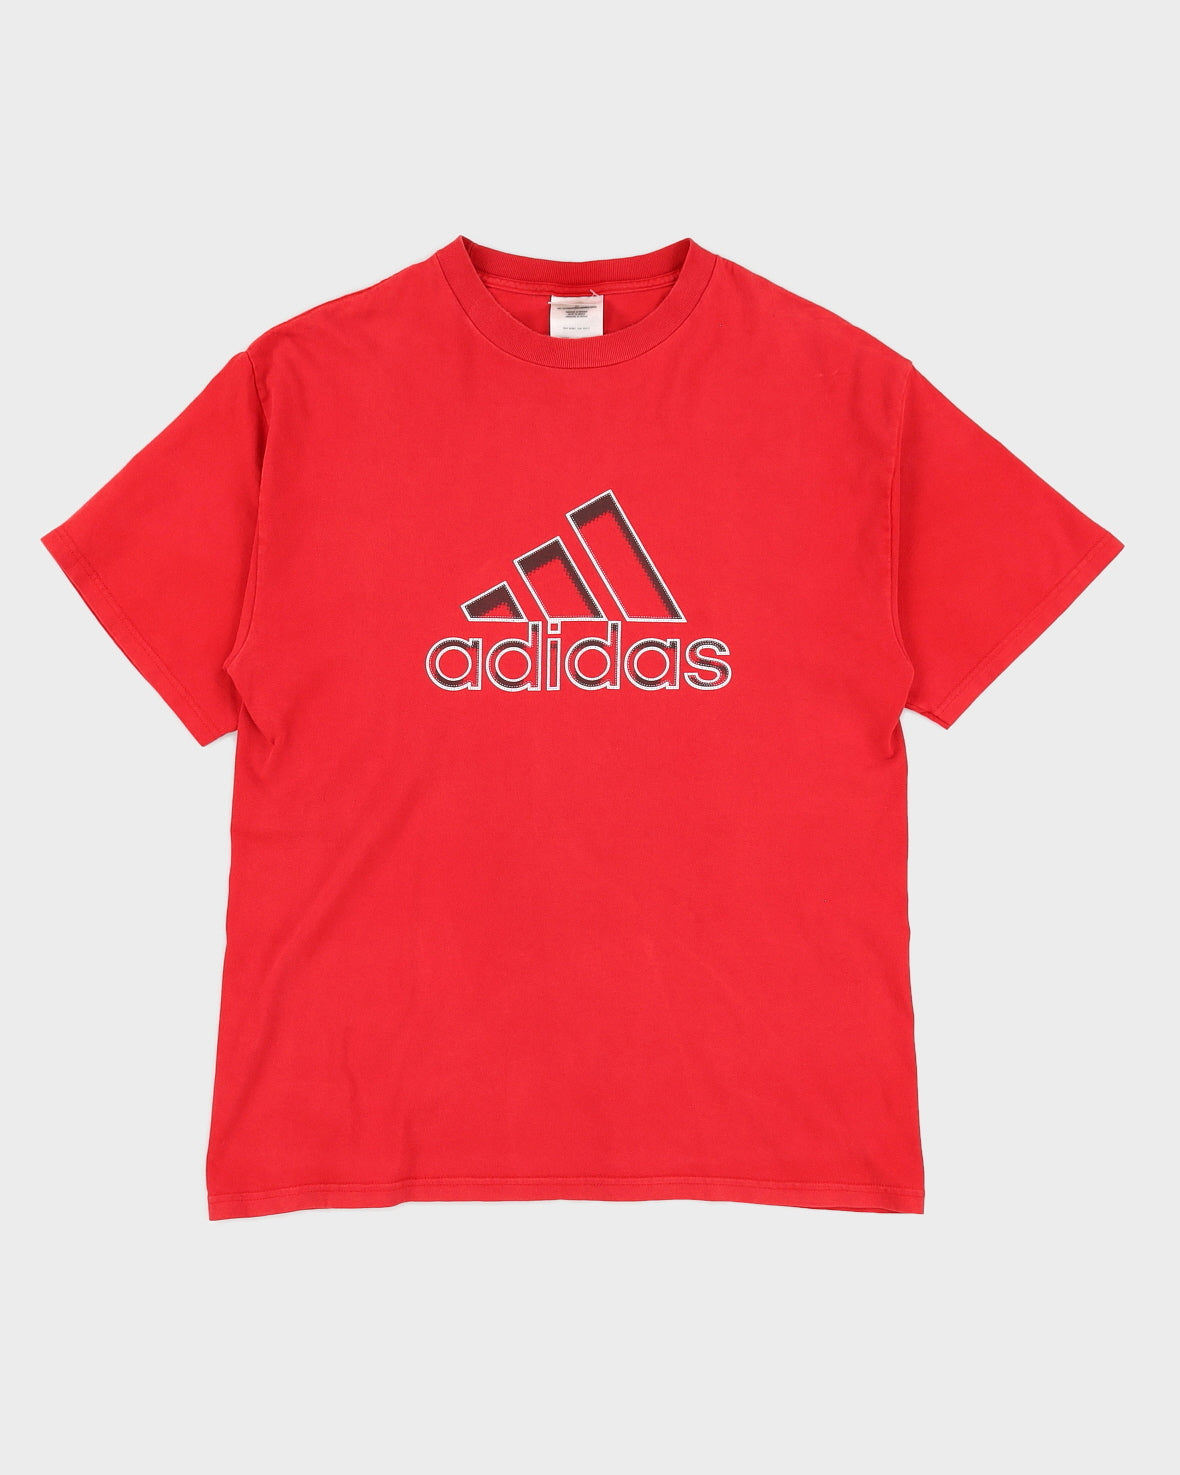 00s Adidas Red Logo T-Shirt - L